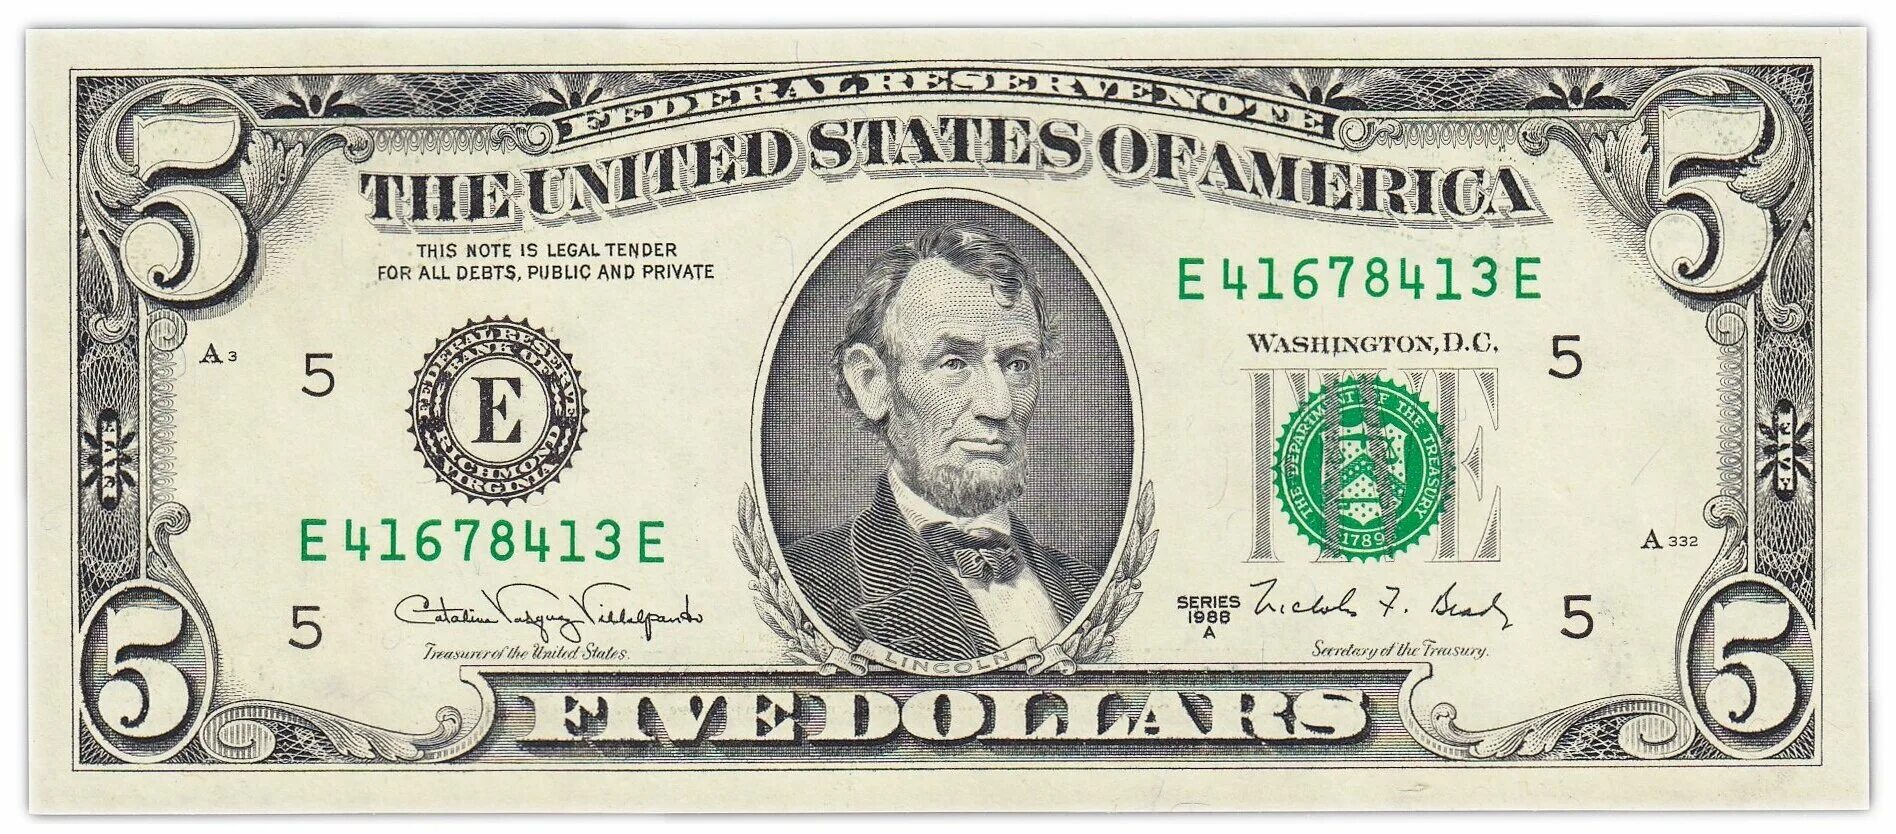 Доллар цена 25. Пять долларов США банкноты США. 5 Долларовая купюра. 5 Долларов США. Купюра 5 долларов США.